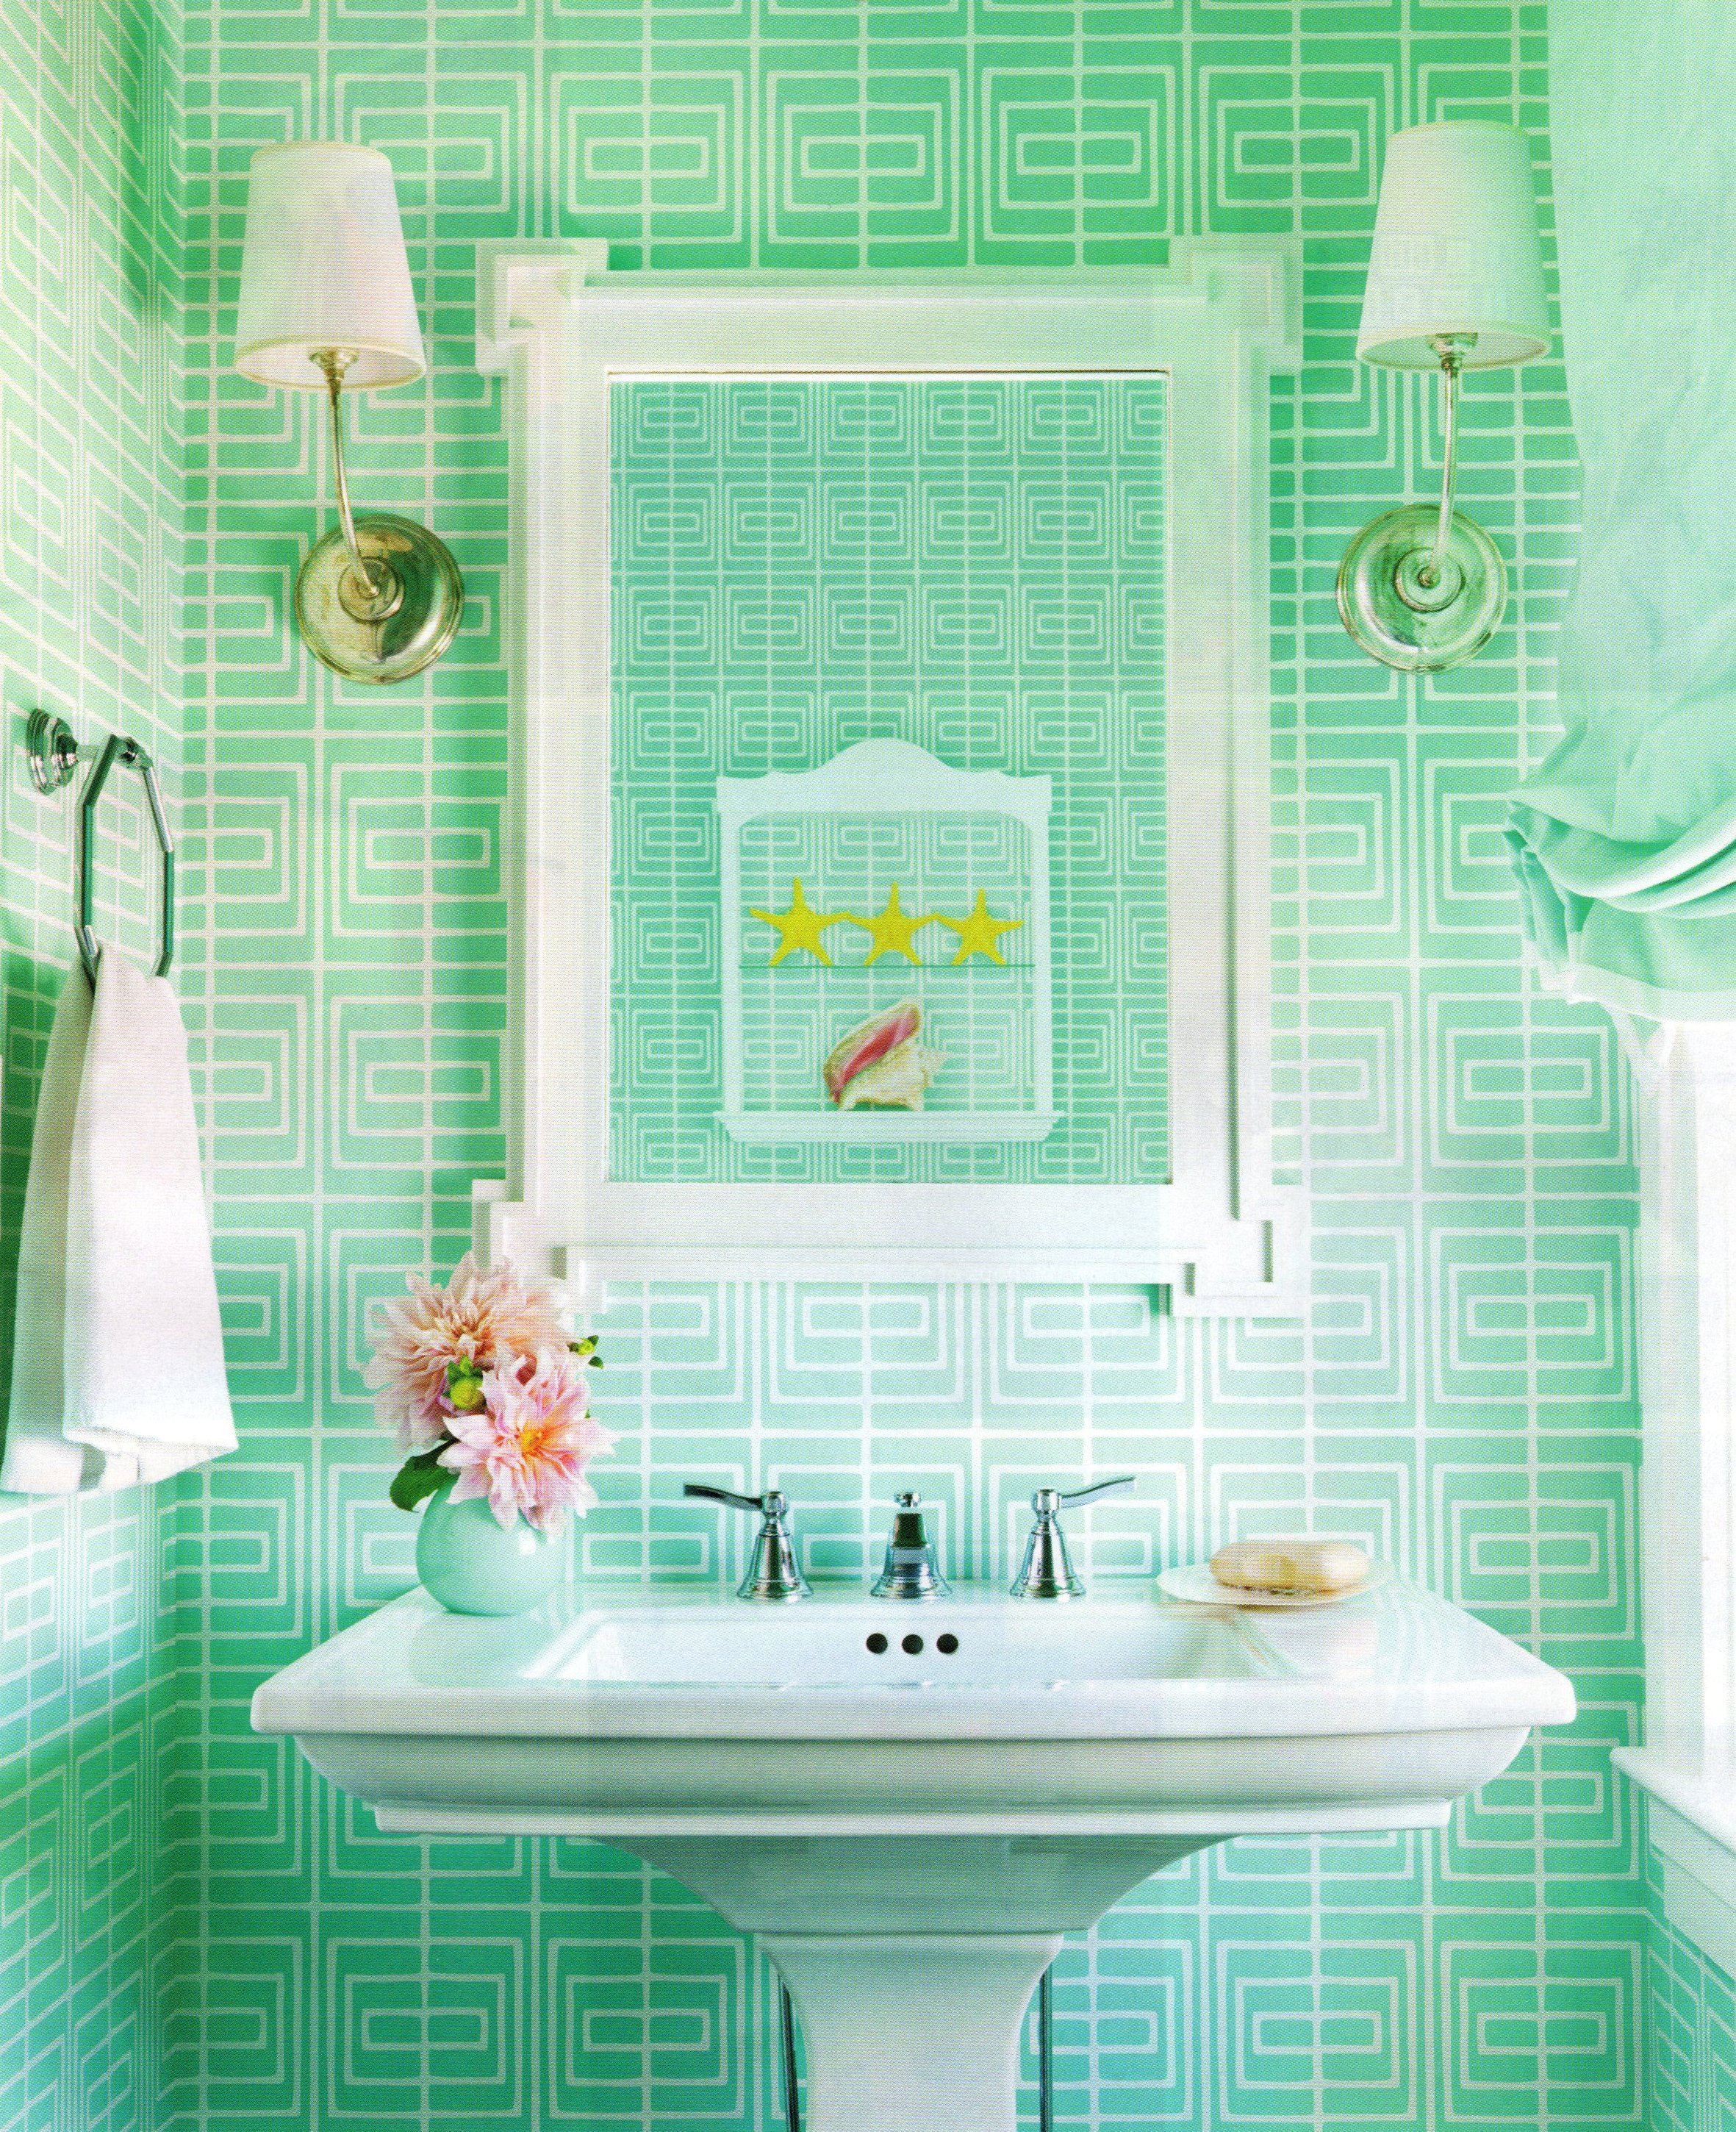 decoration vert salle de bain idee